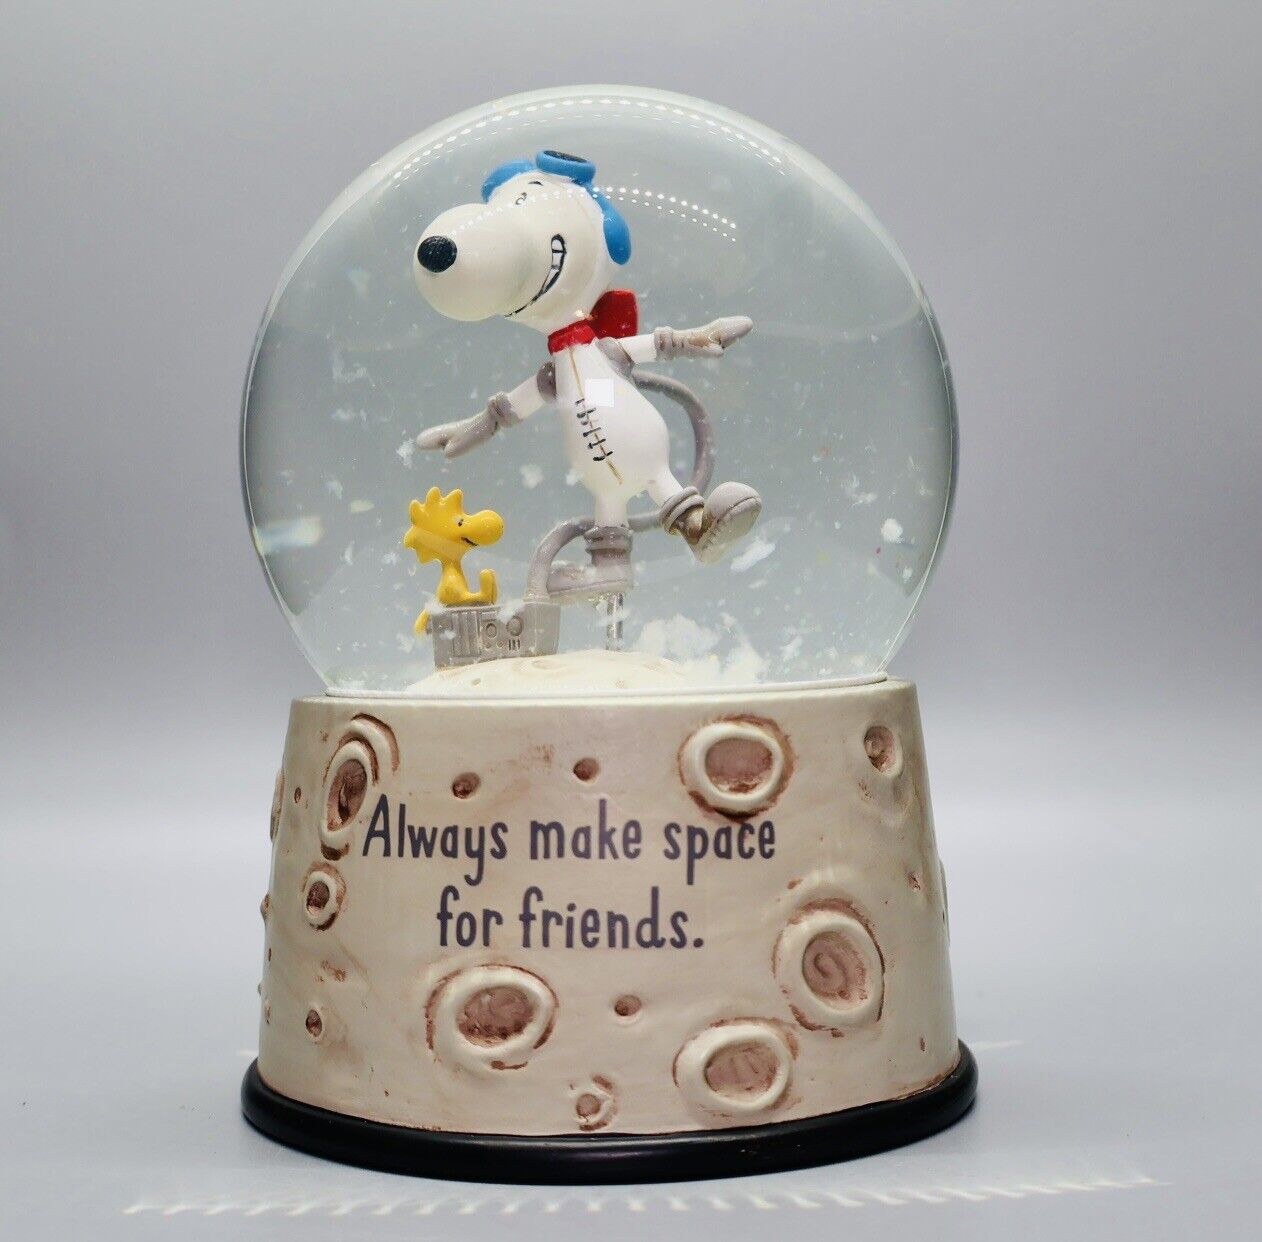 Hallmark Peanuts Snoopy Always Make Space For Friends Snowglobe *new w/ tags*